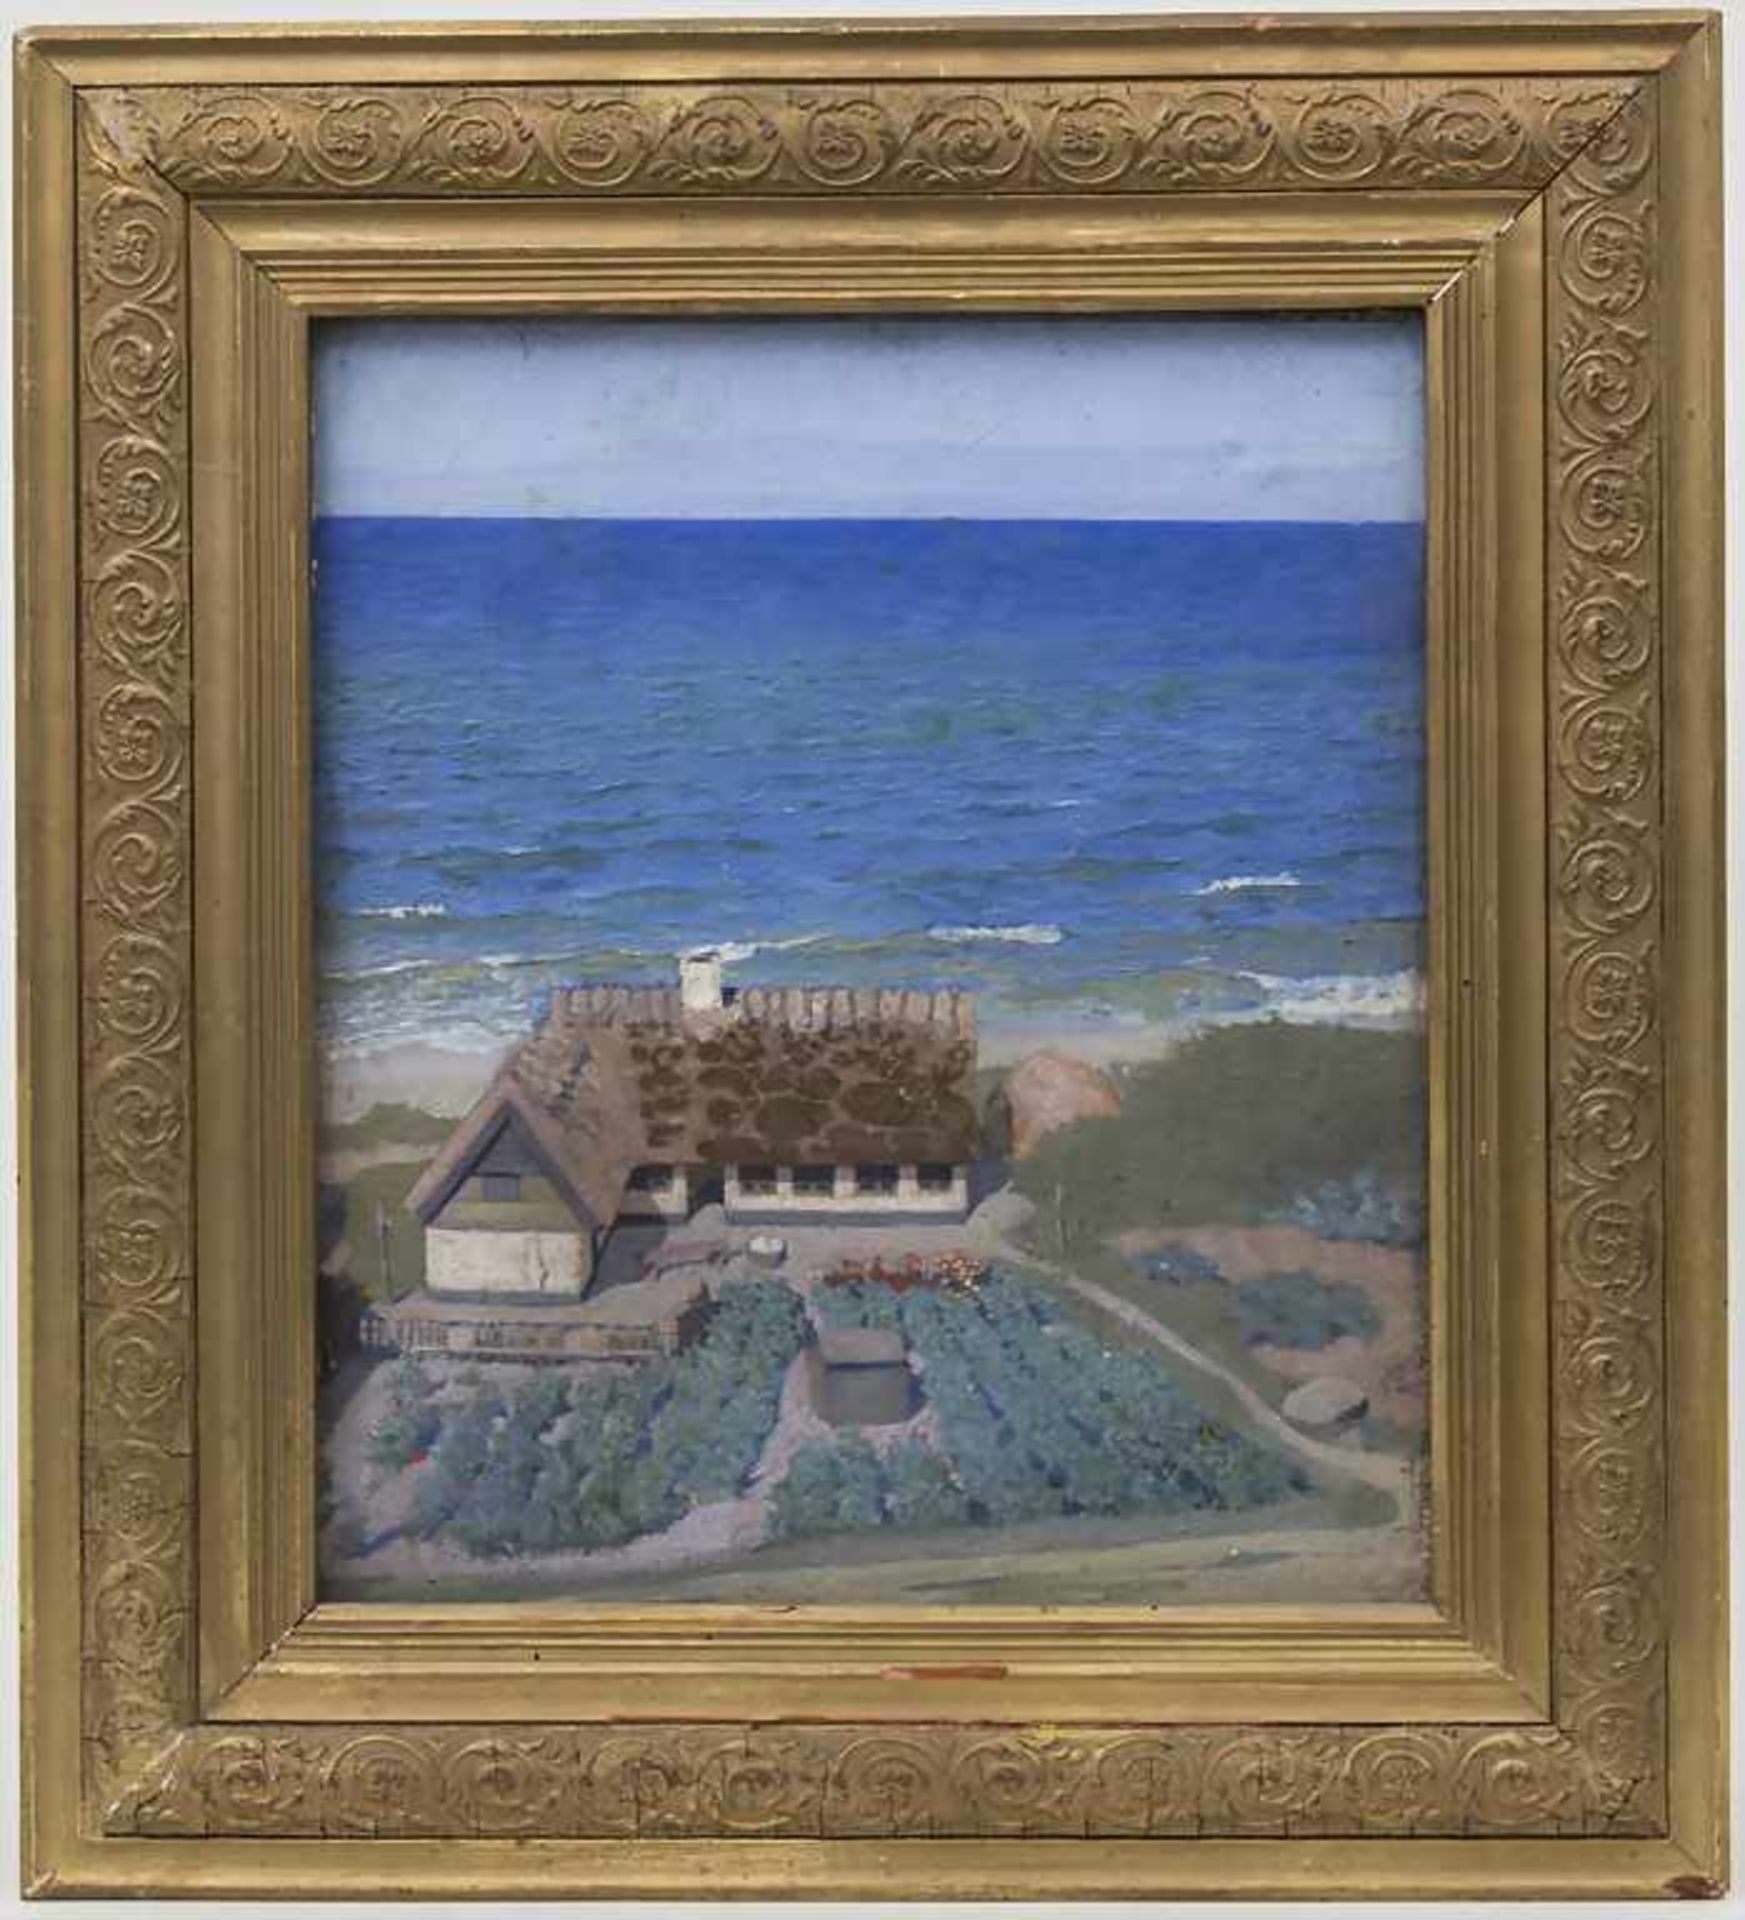 Dänischer Künstler (19. Jh.), 'Küstenhaus' / 'A coastal house' Technik: Öl auf Leinwand, gerahmt, - Bild 2 aus 2